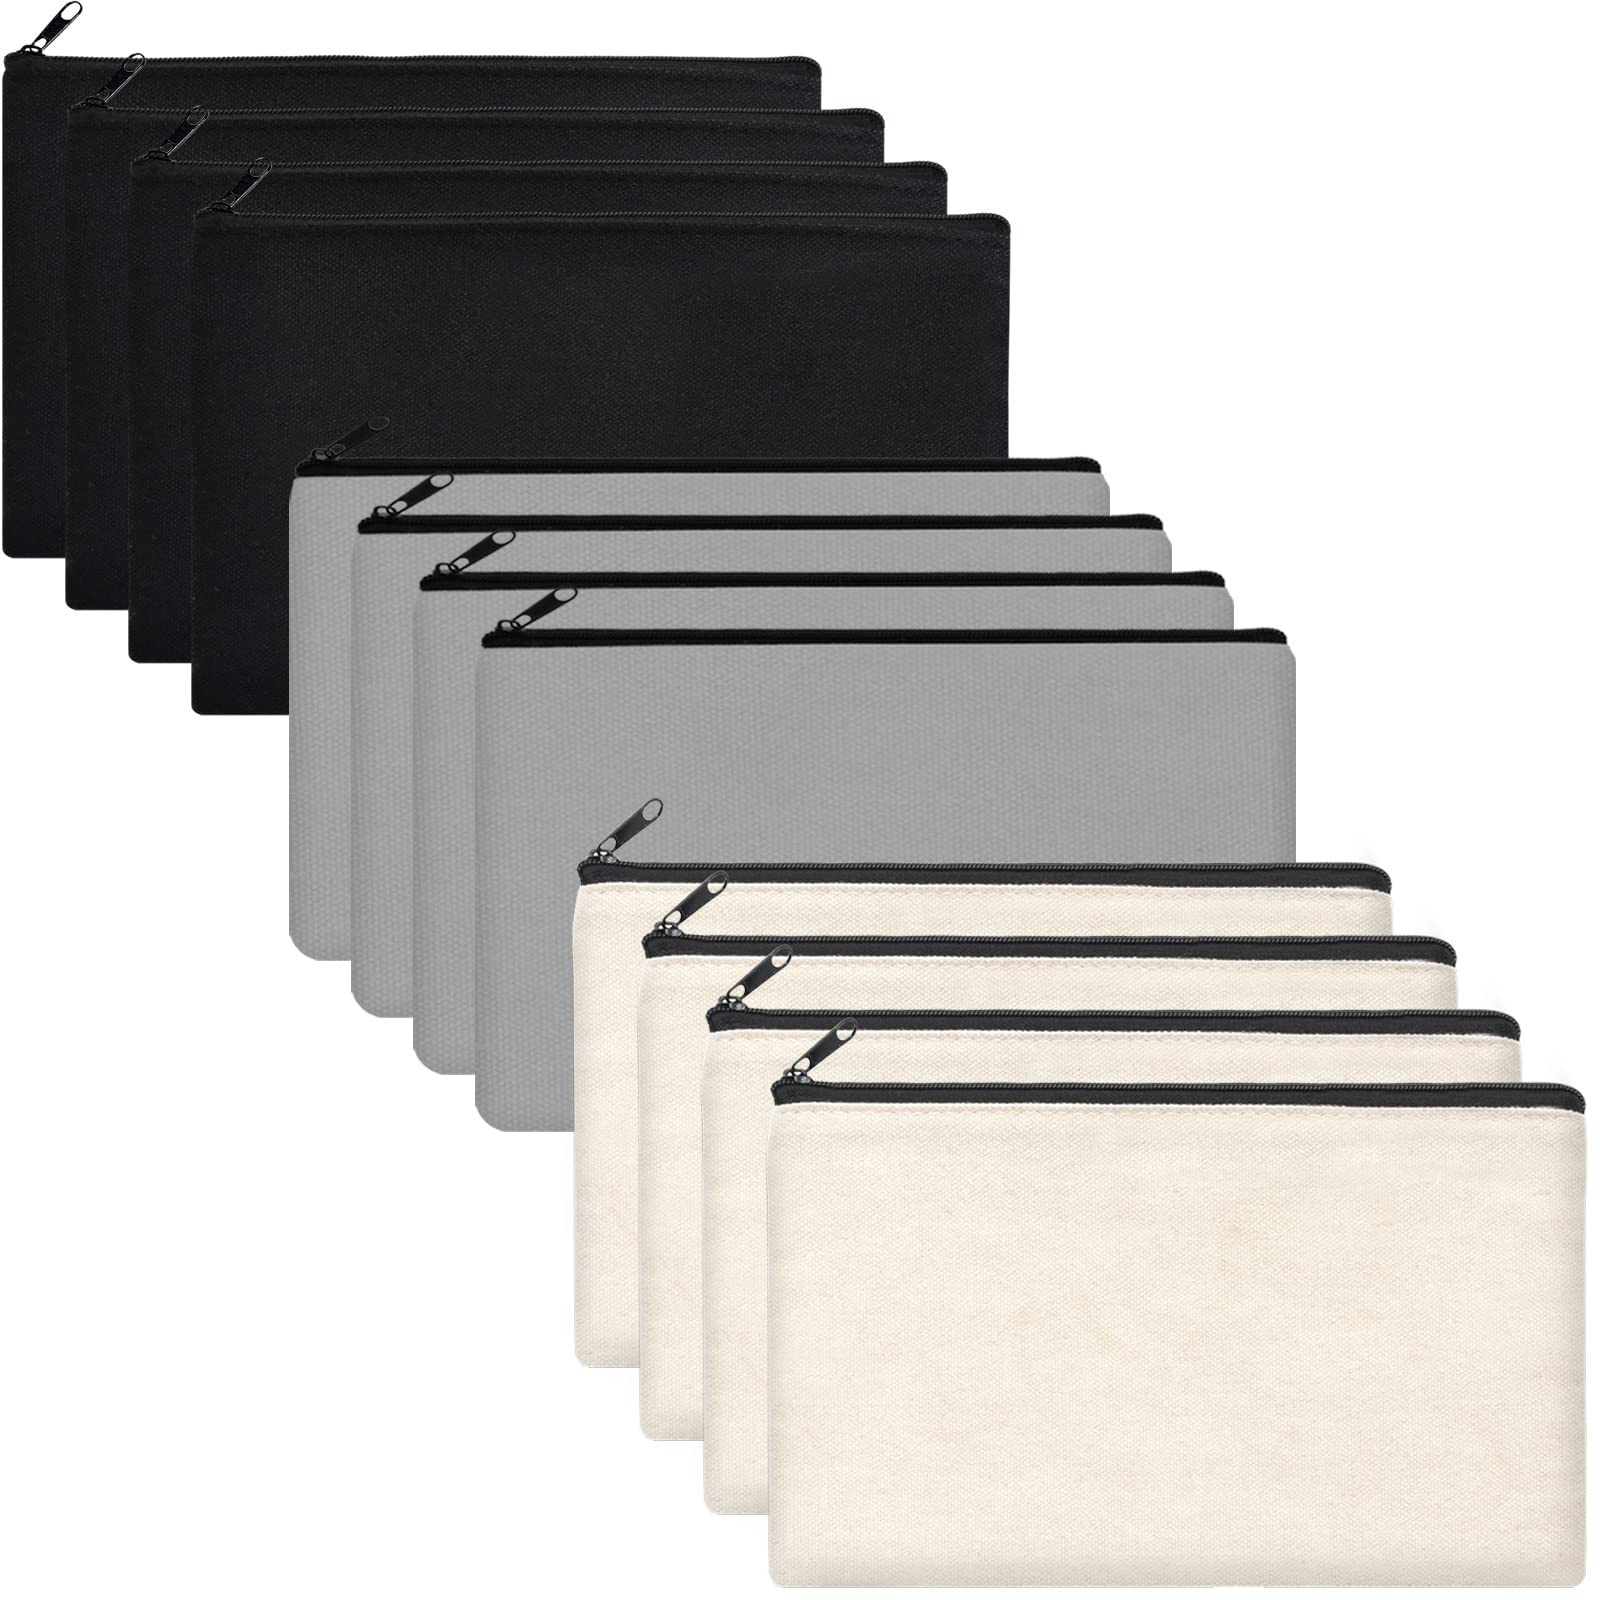 ZeeDix 12 Pieces Canvas Pencil Pouch Bulk- 8.3 x 5 inches Blank DIY Craft Bag  Canvas Zipper Bags Pen Case Multipurpose Cosmetic Bag Canvas Makeup Bag  Travel Toiletry Bag for Storage(Black+Grey+Beige) 12pcs